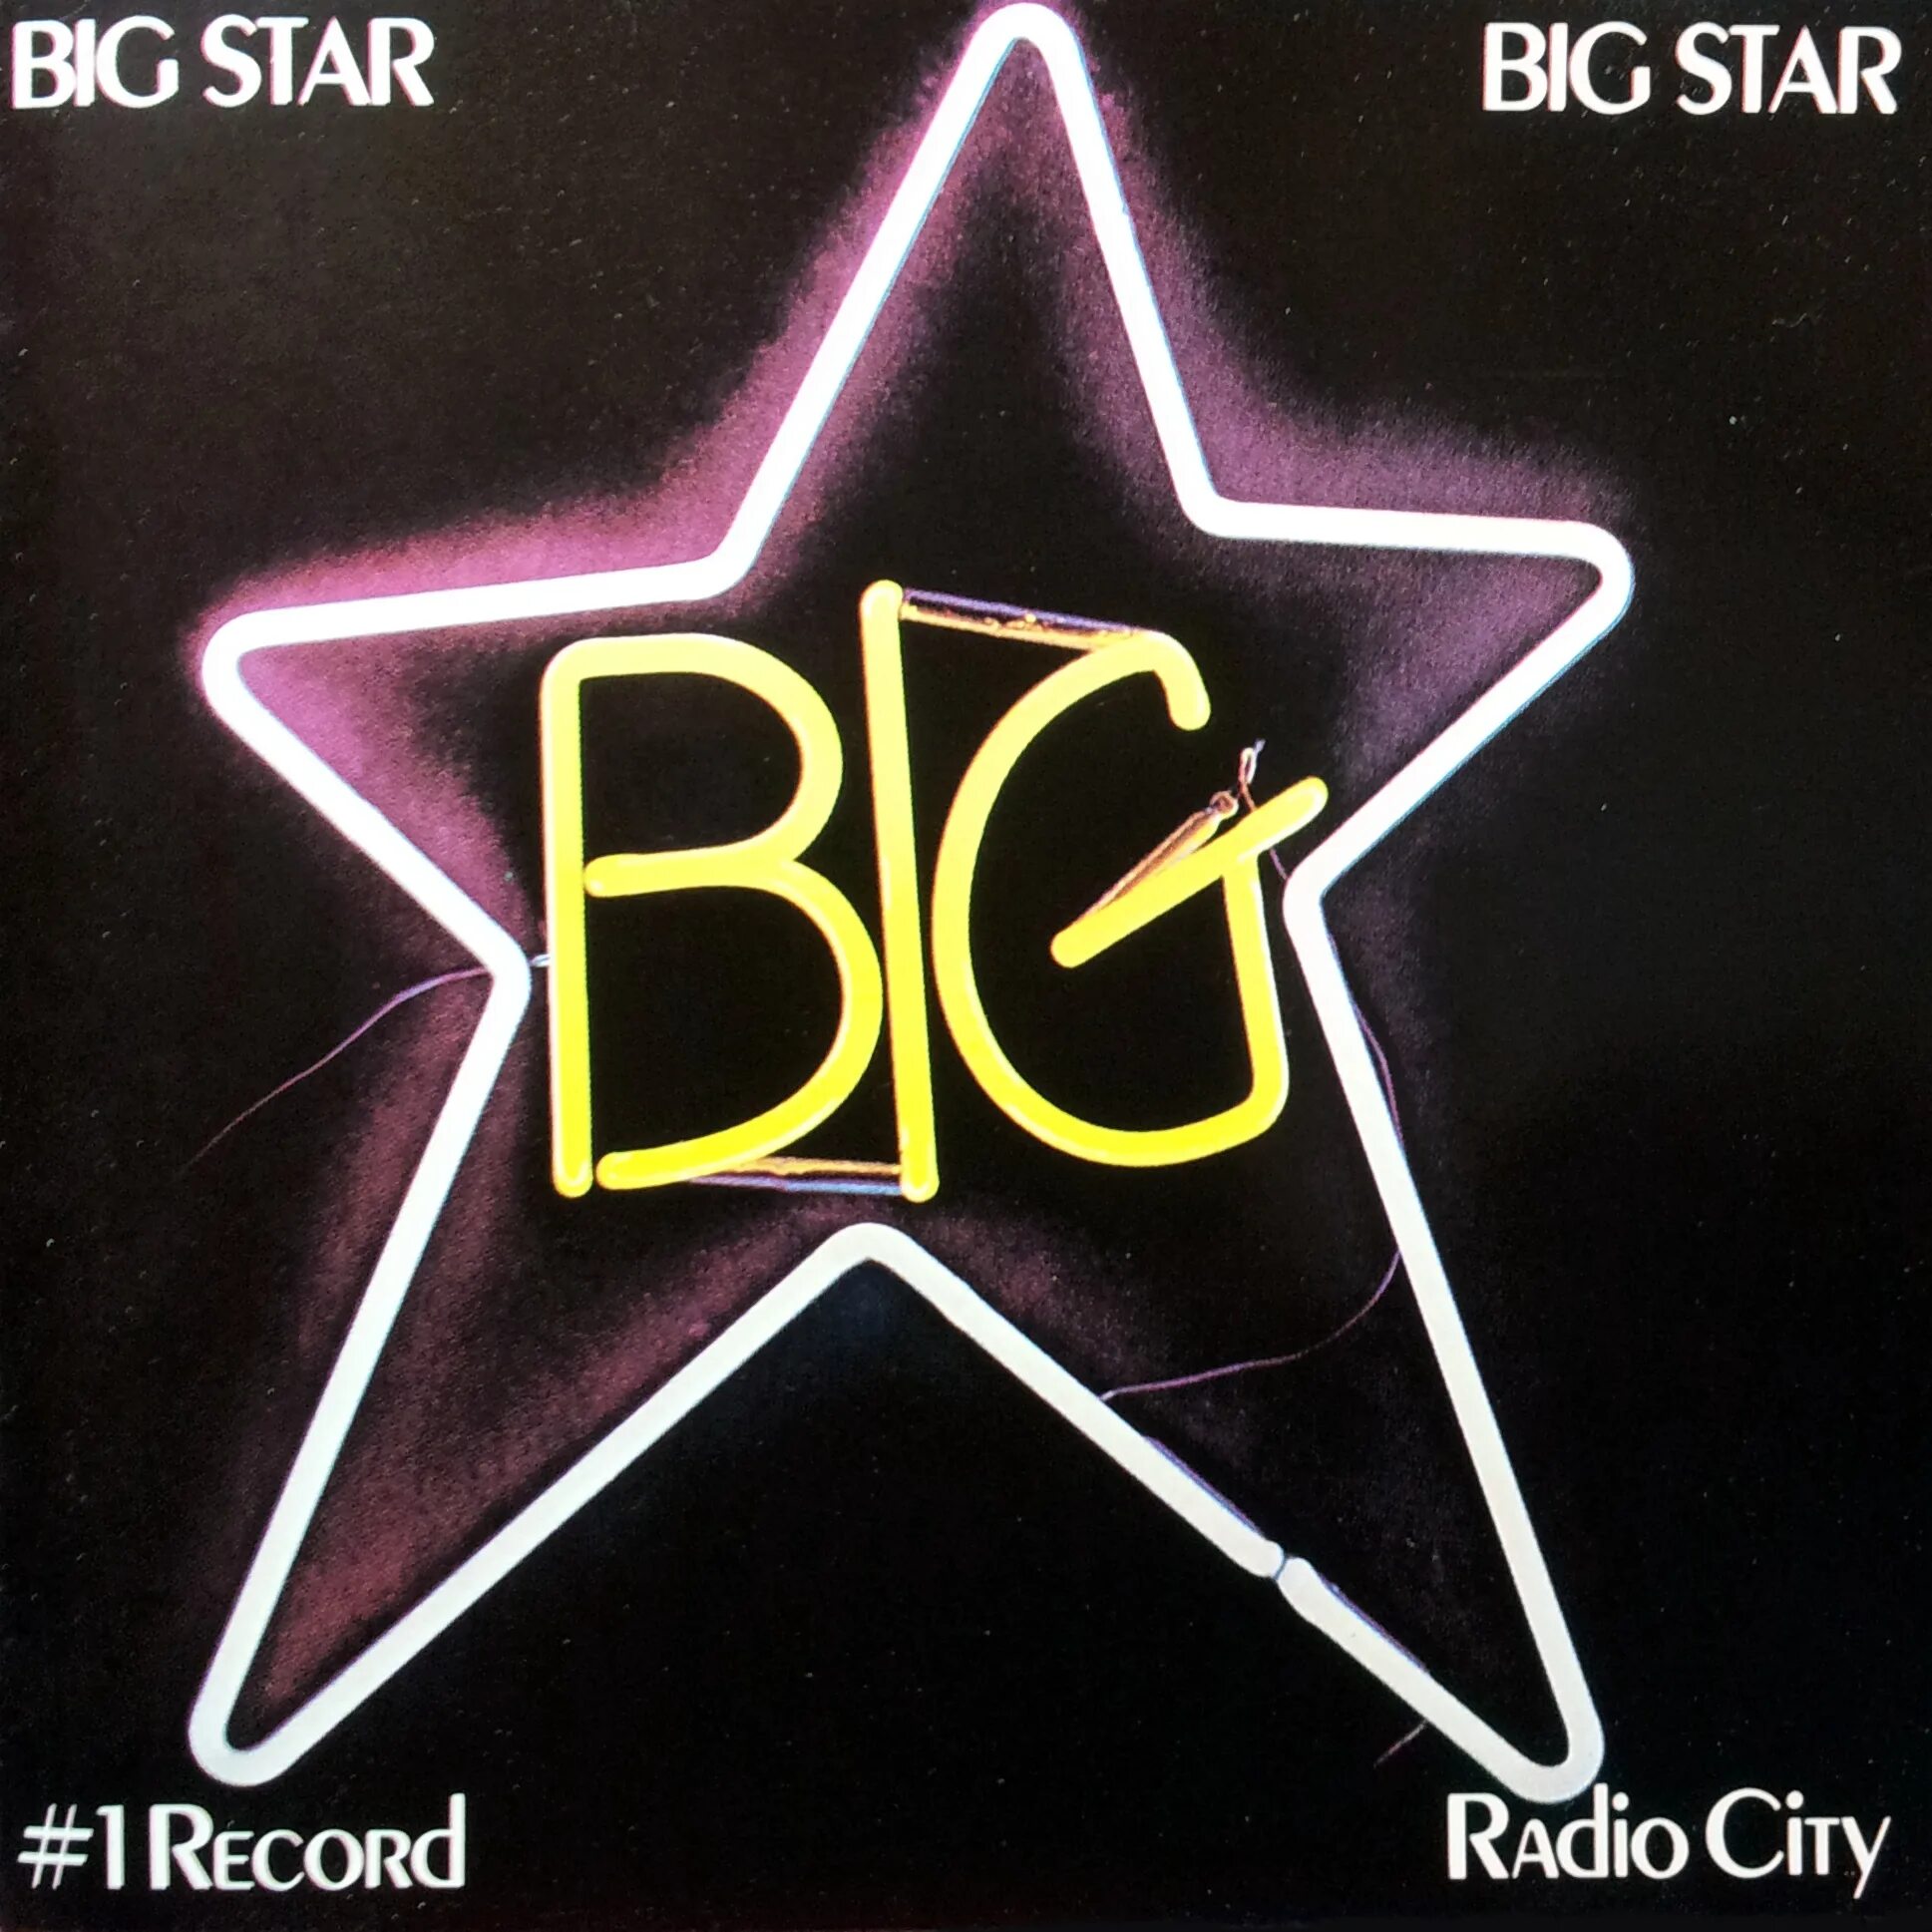 Stars complete. Big Star. Big Star - #1 record. Big Star number 1 record. Big Star "Radio City".